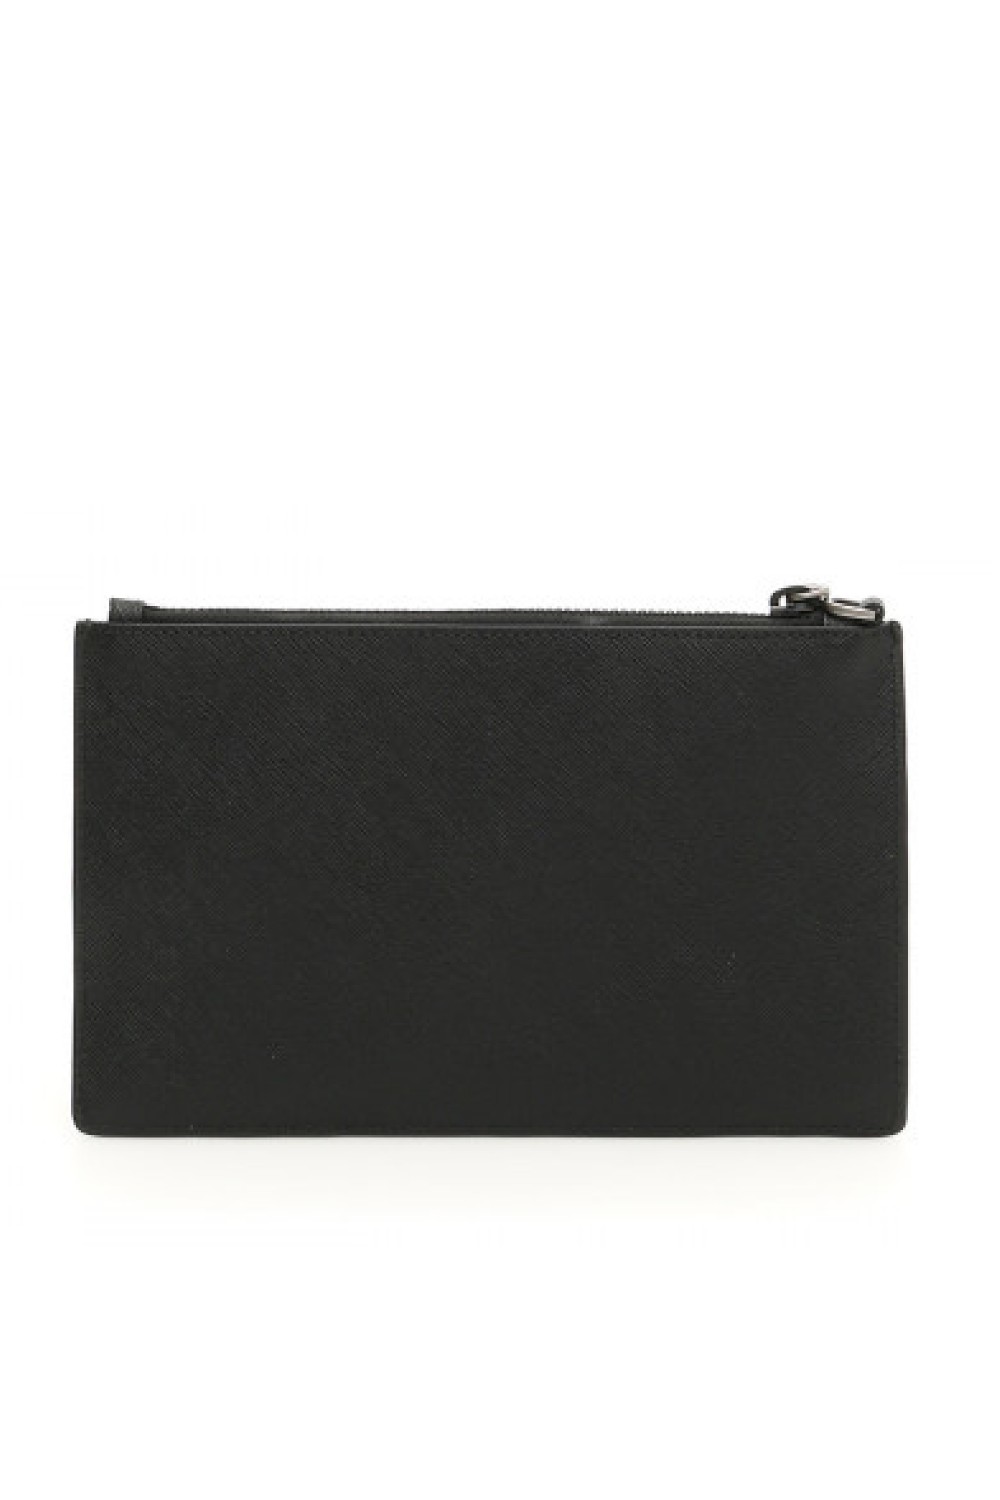 Prada Saffiano leather document holder-2NG006 (Black) – AEU Premium